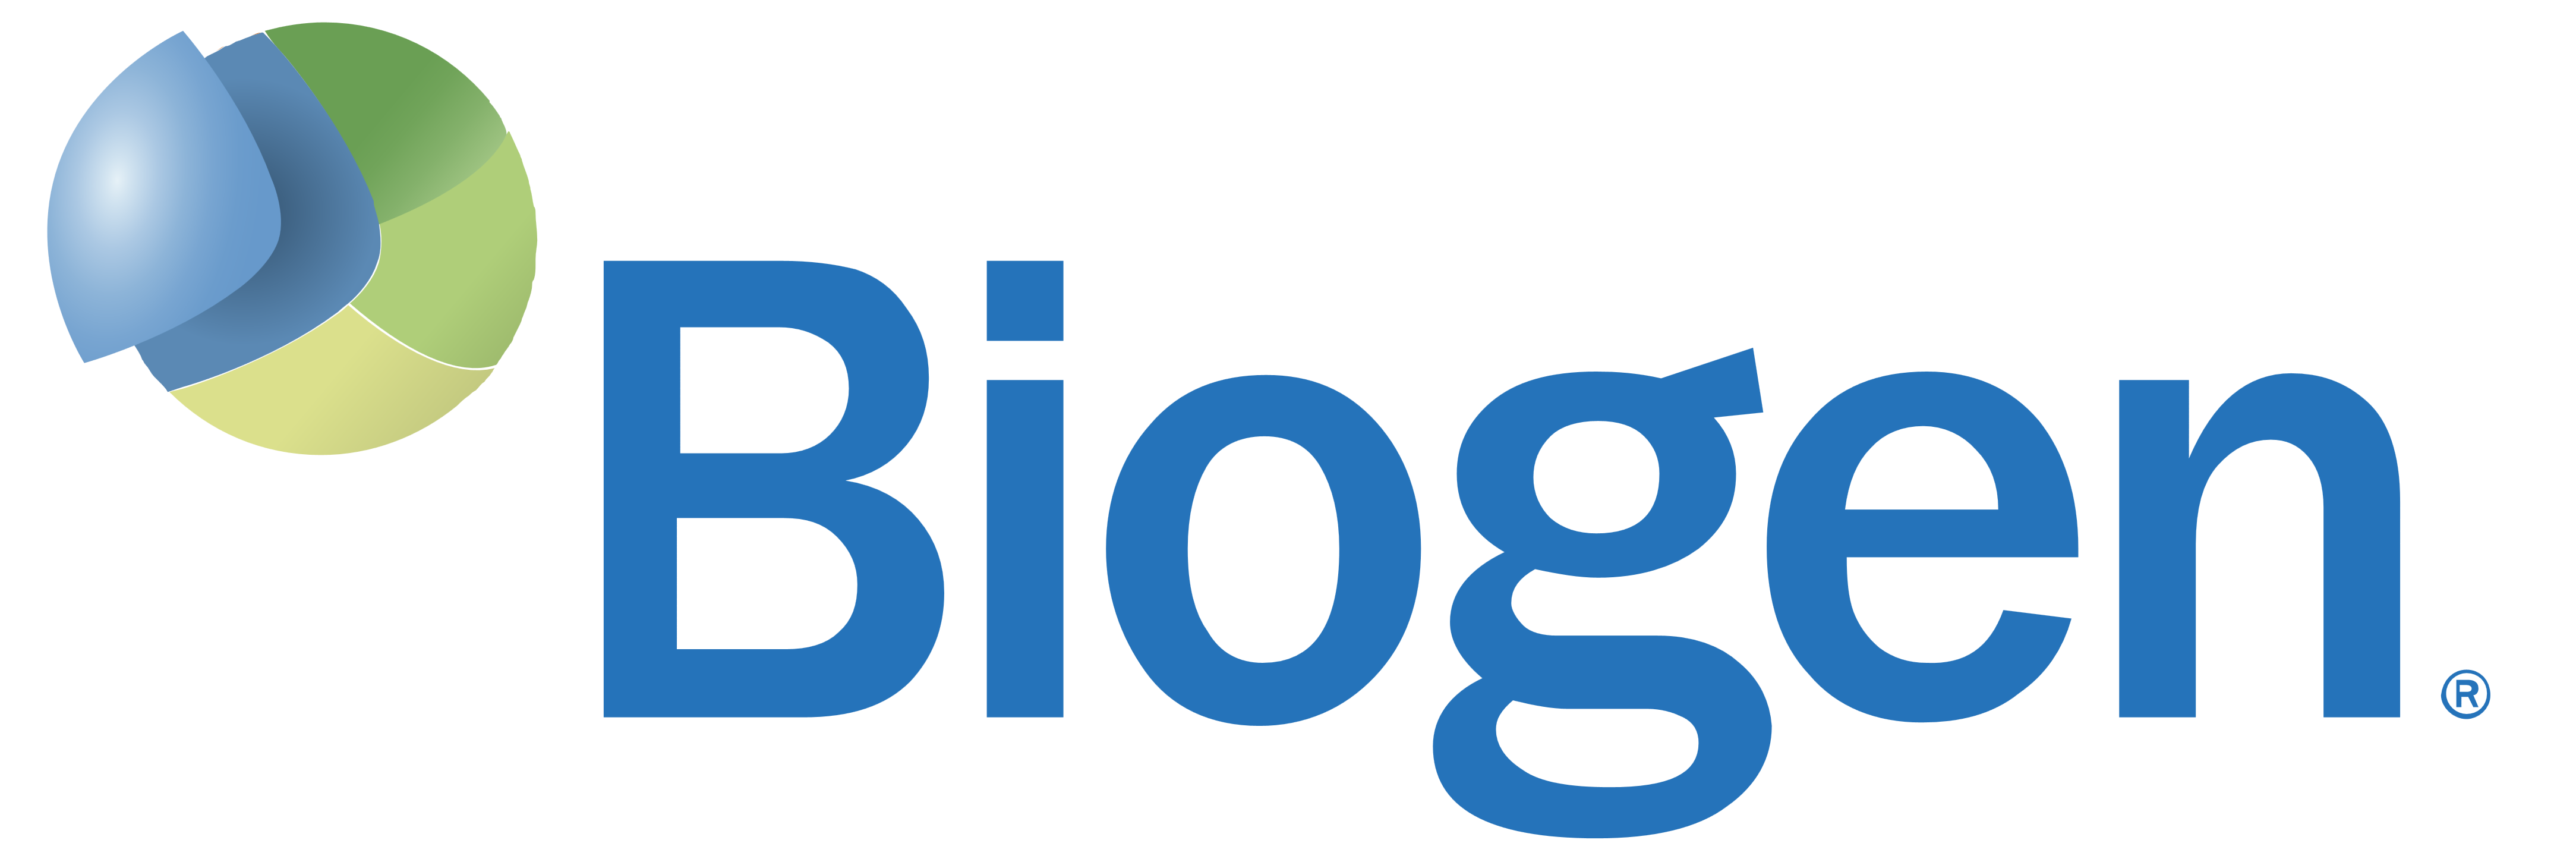 Biogen_logo.png